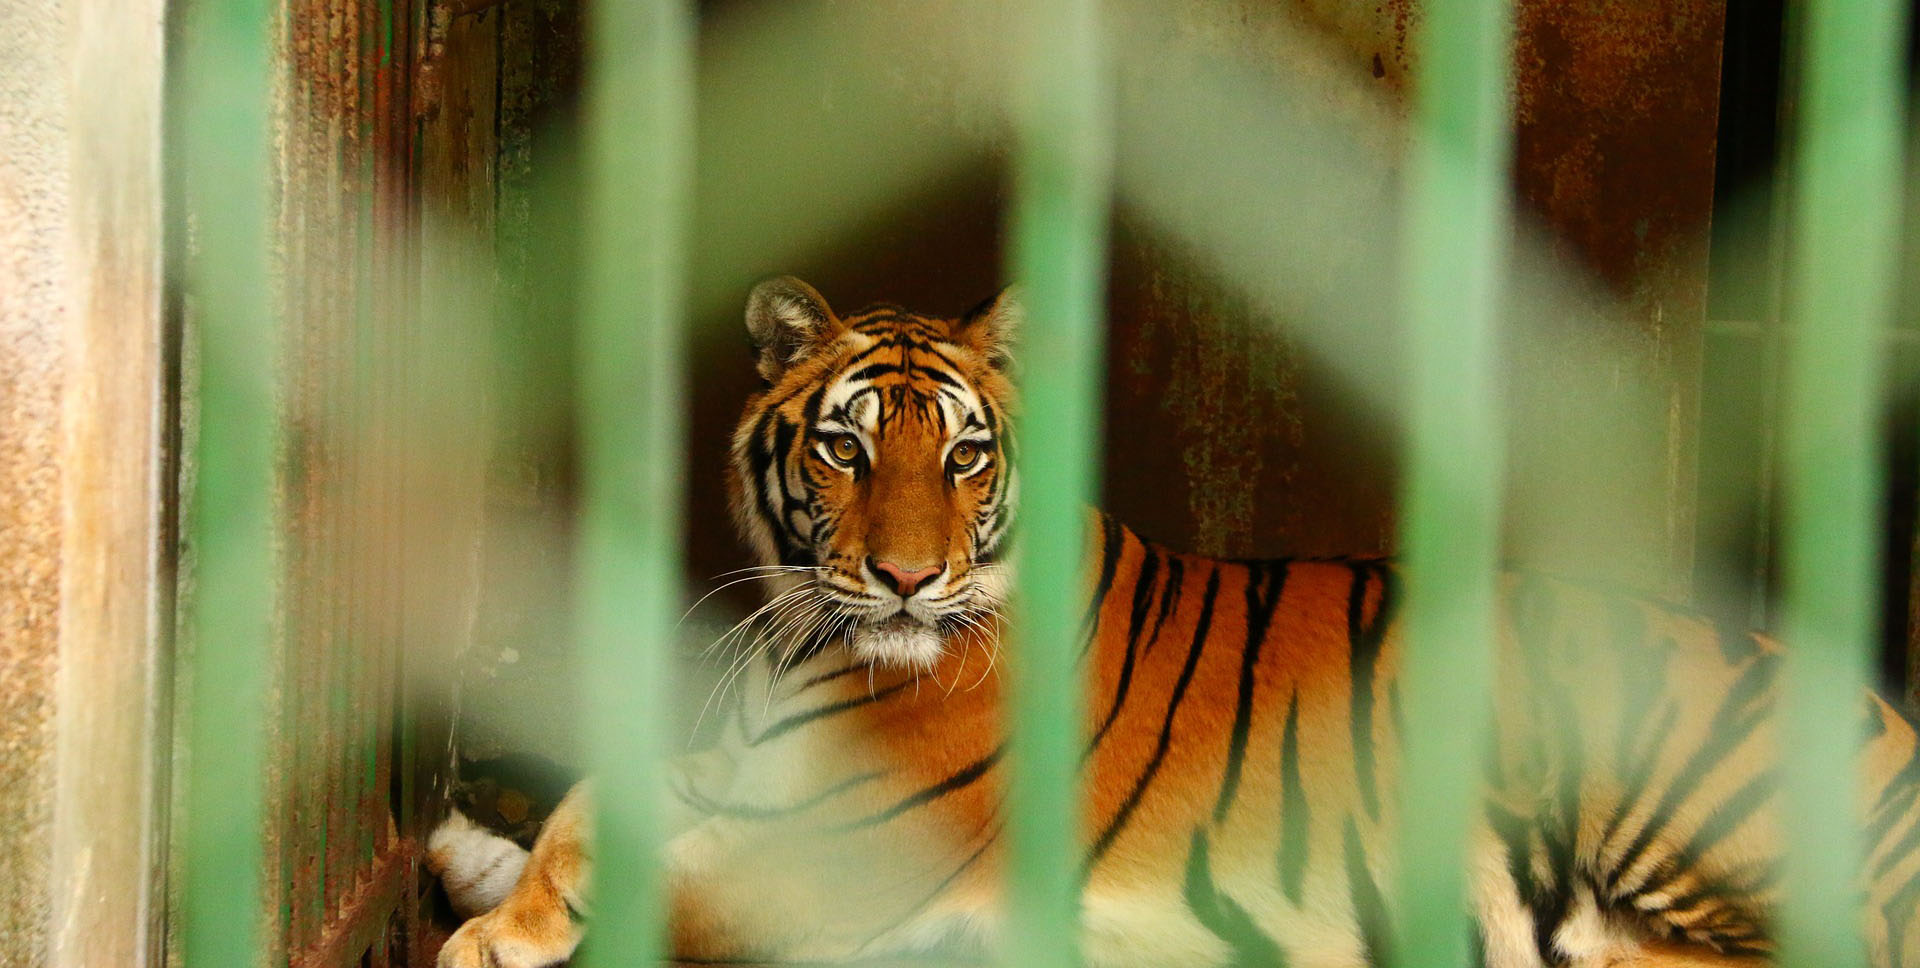 Captive Animals Animal Legal Defense Fund